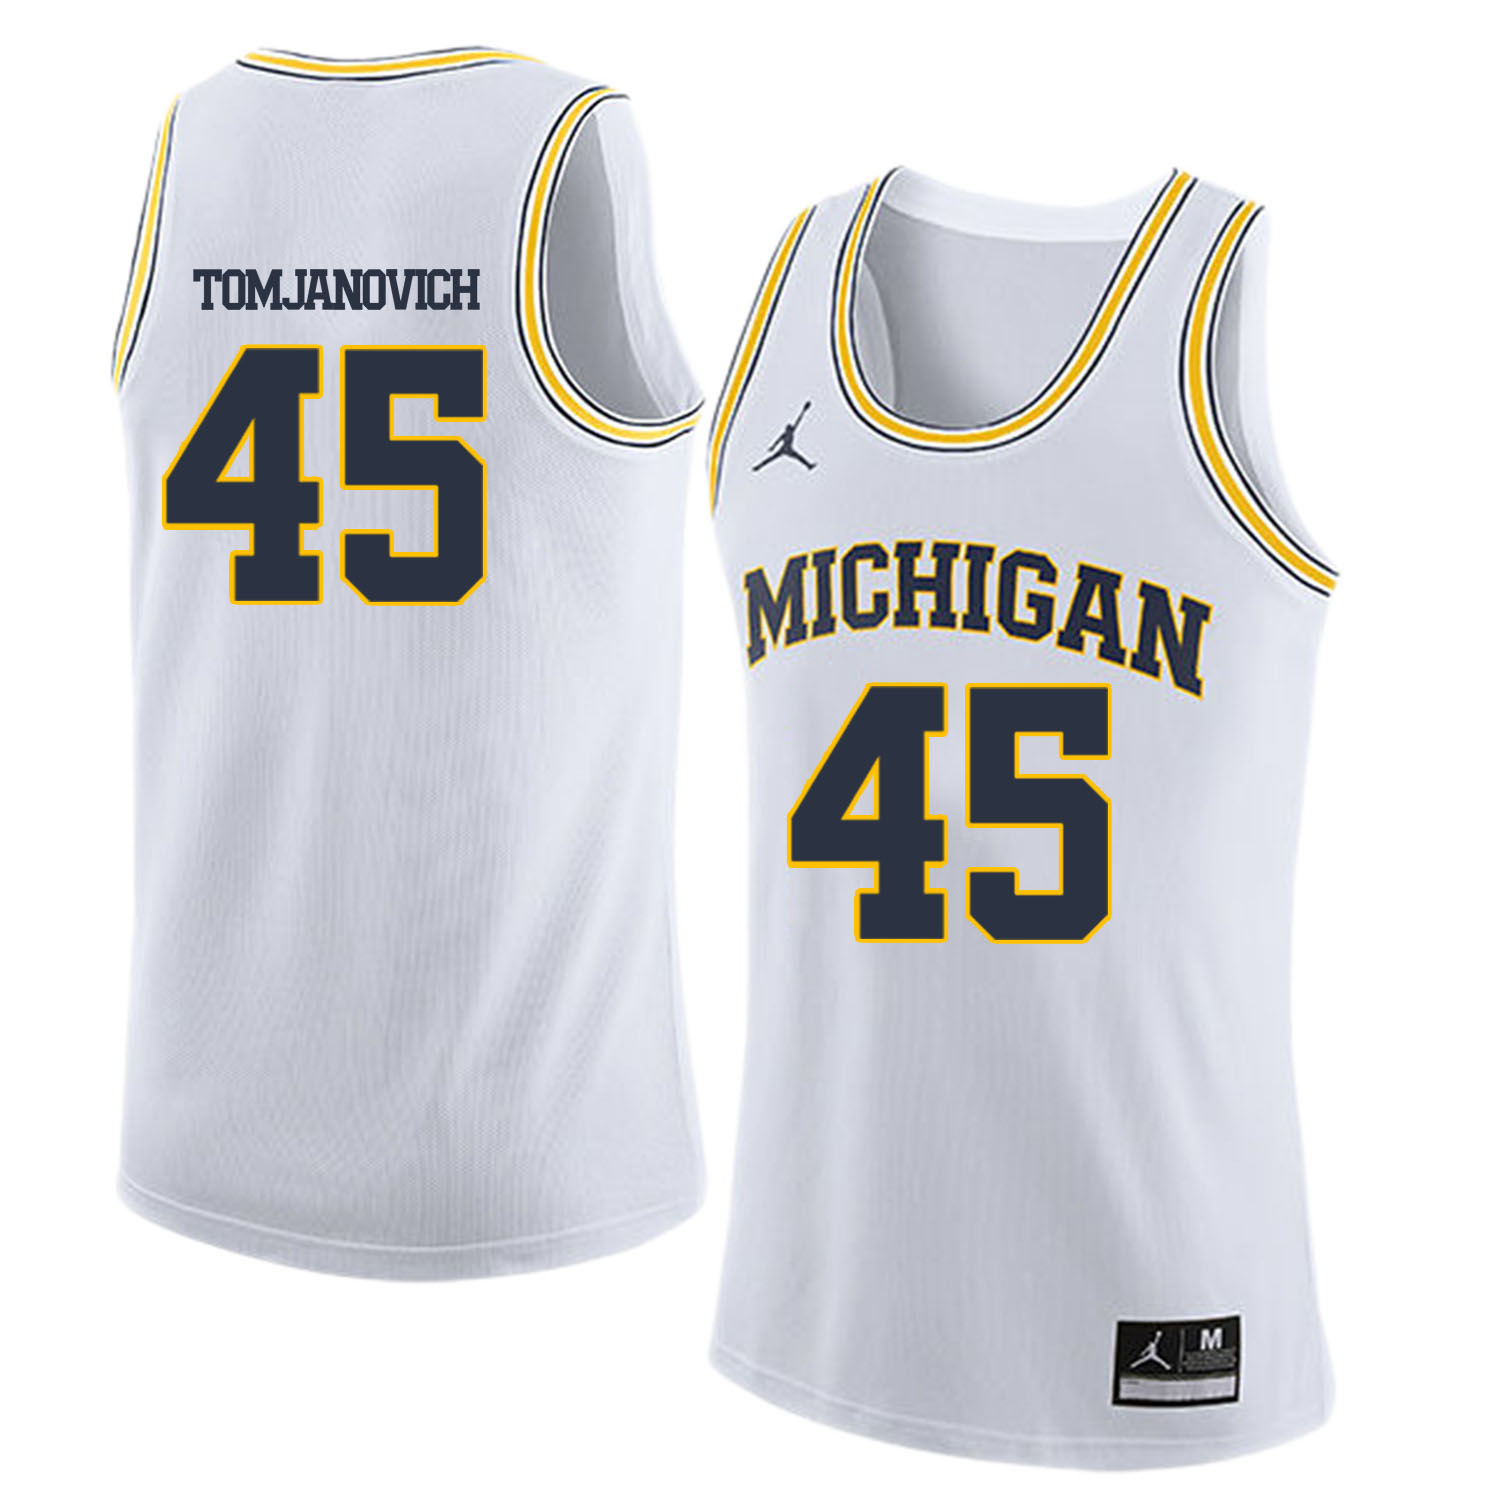 University of Michigan 45 Rudy Tomjanovich White College Basketball Jersey - Click Image to Close